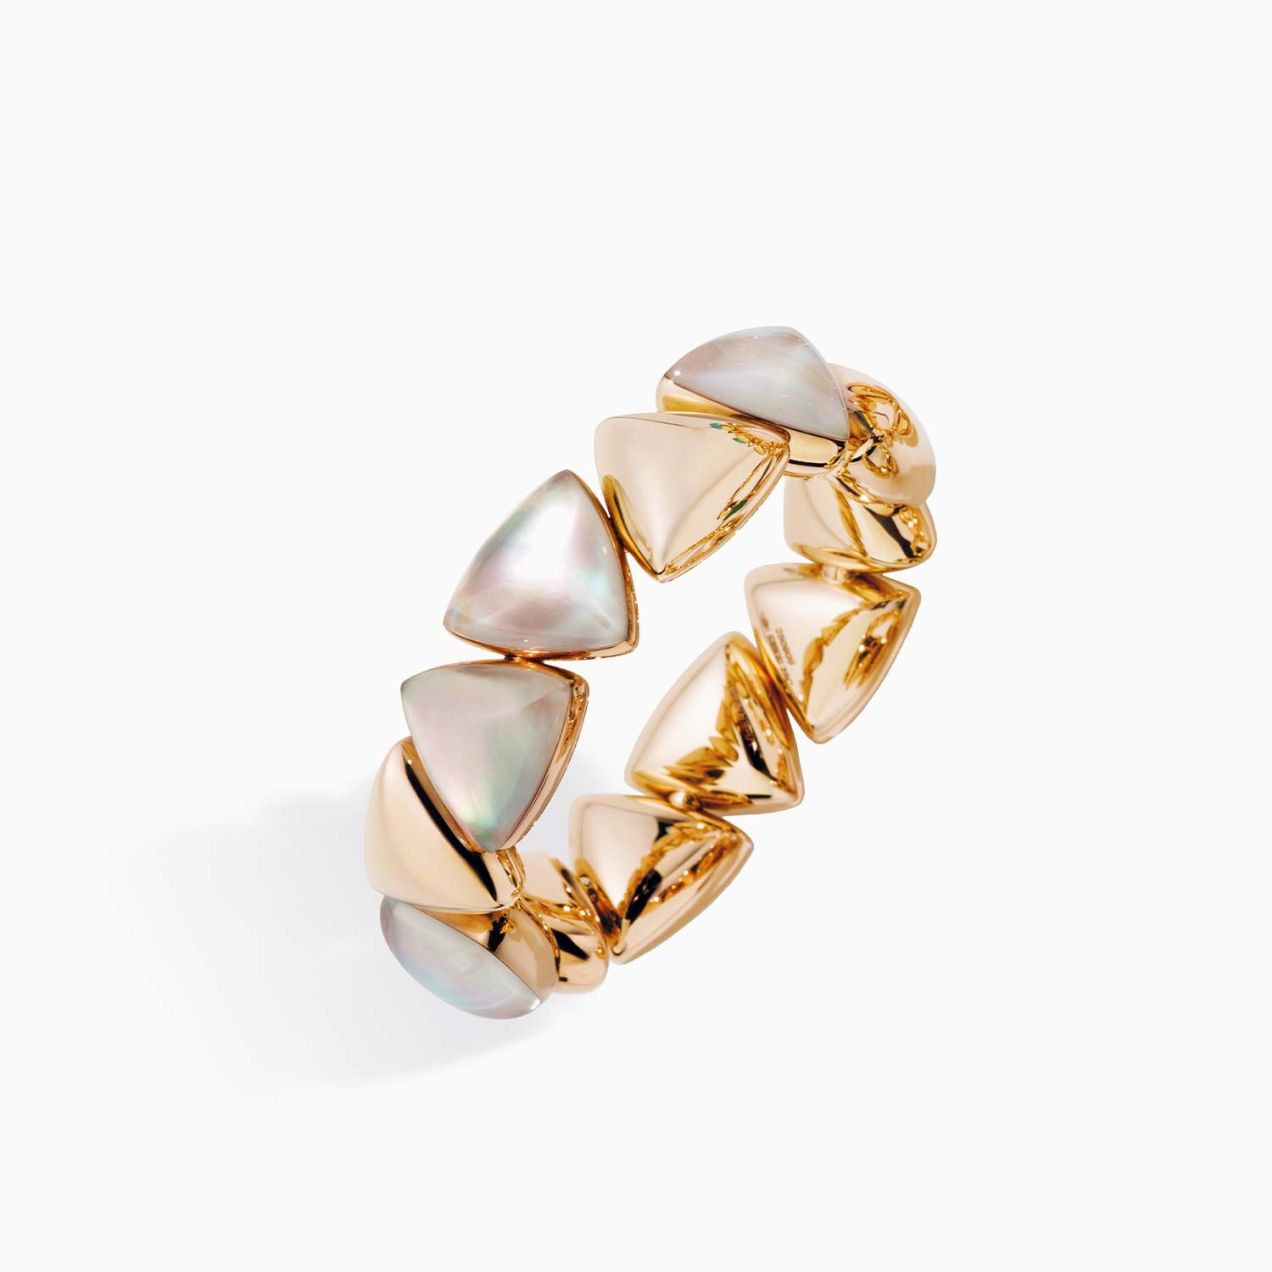 Vhernier freccia rose gold bracelet with quartz crystal and mother of pearl